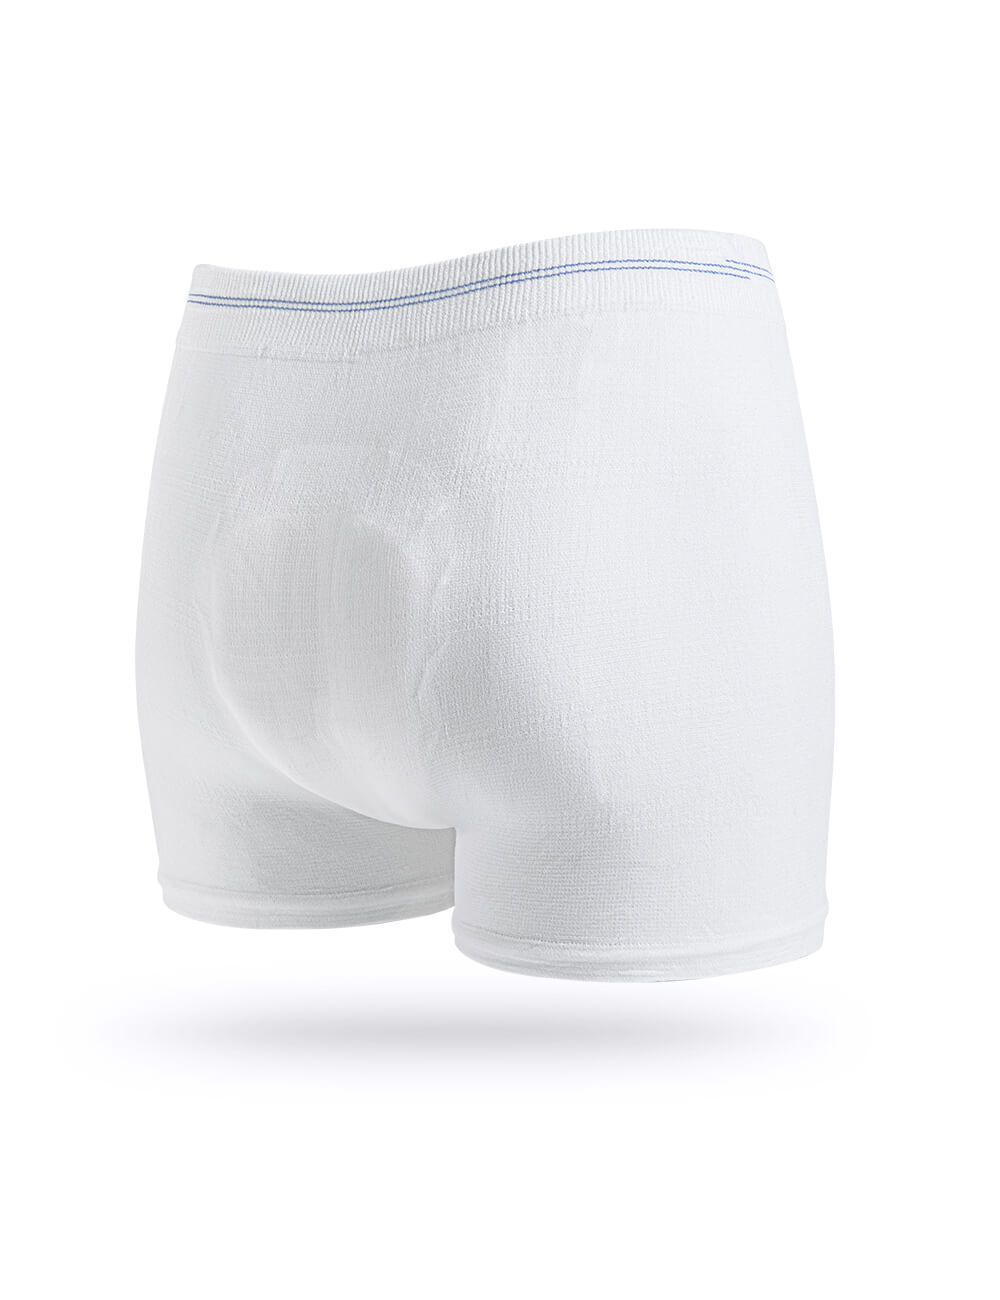 C-Panty Classic Waist C-Section Recovery Underwear Kuwait